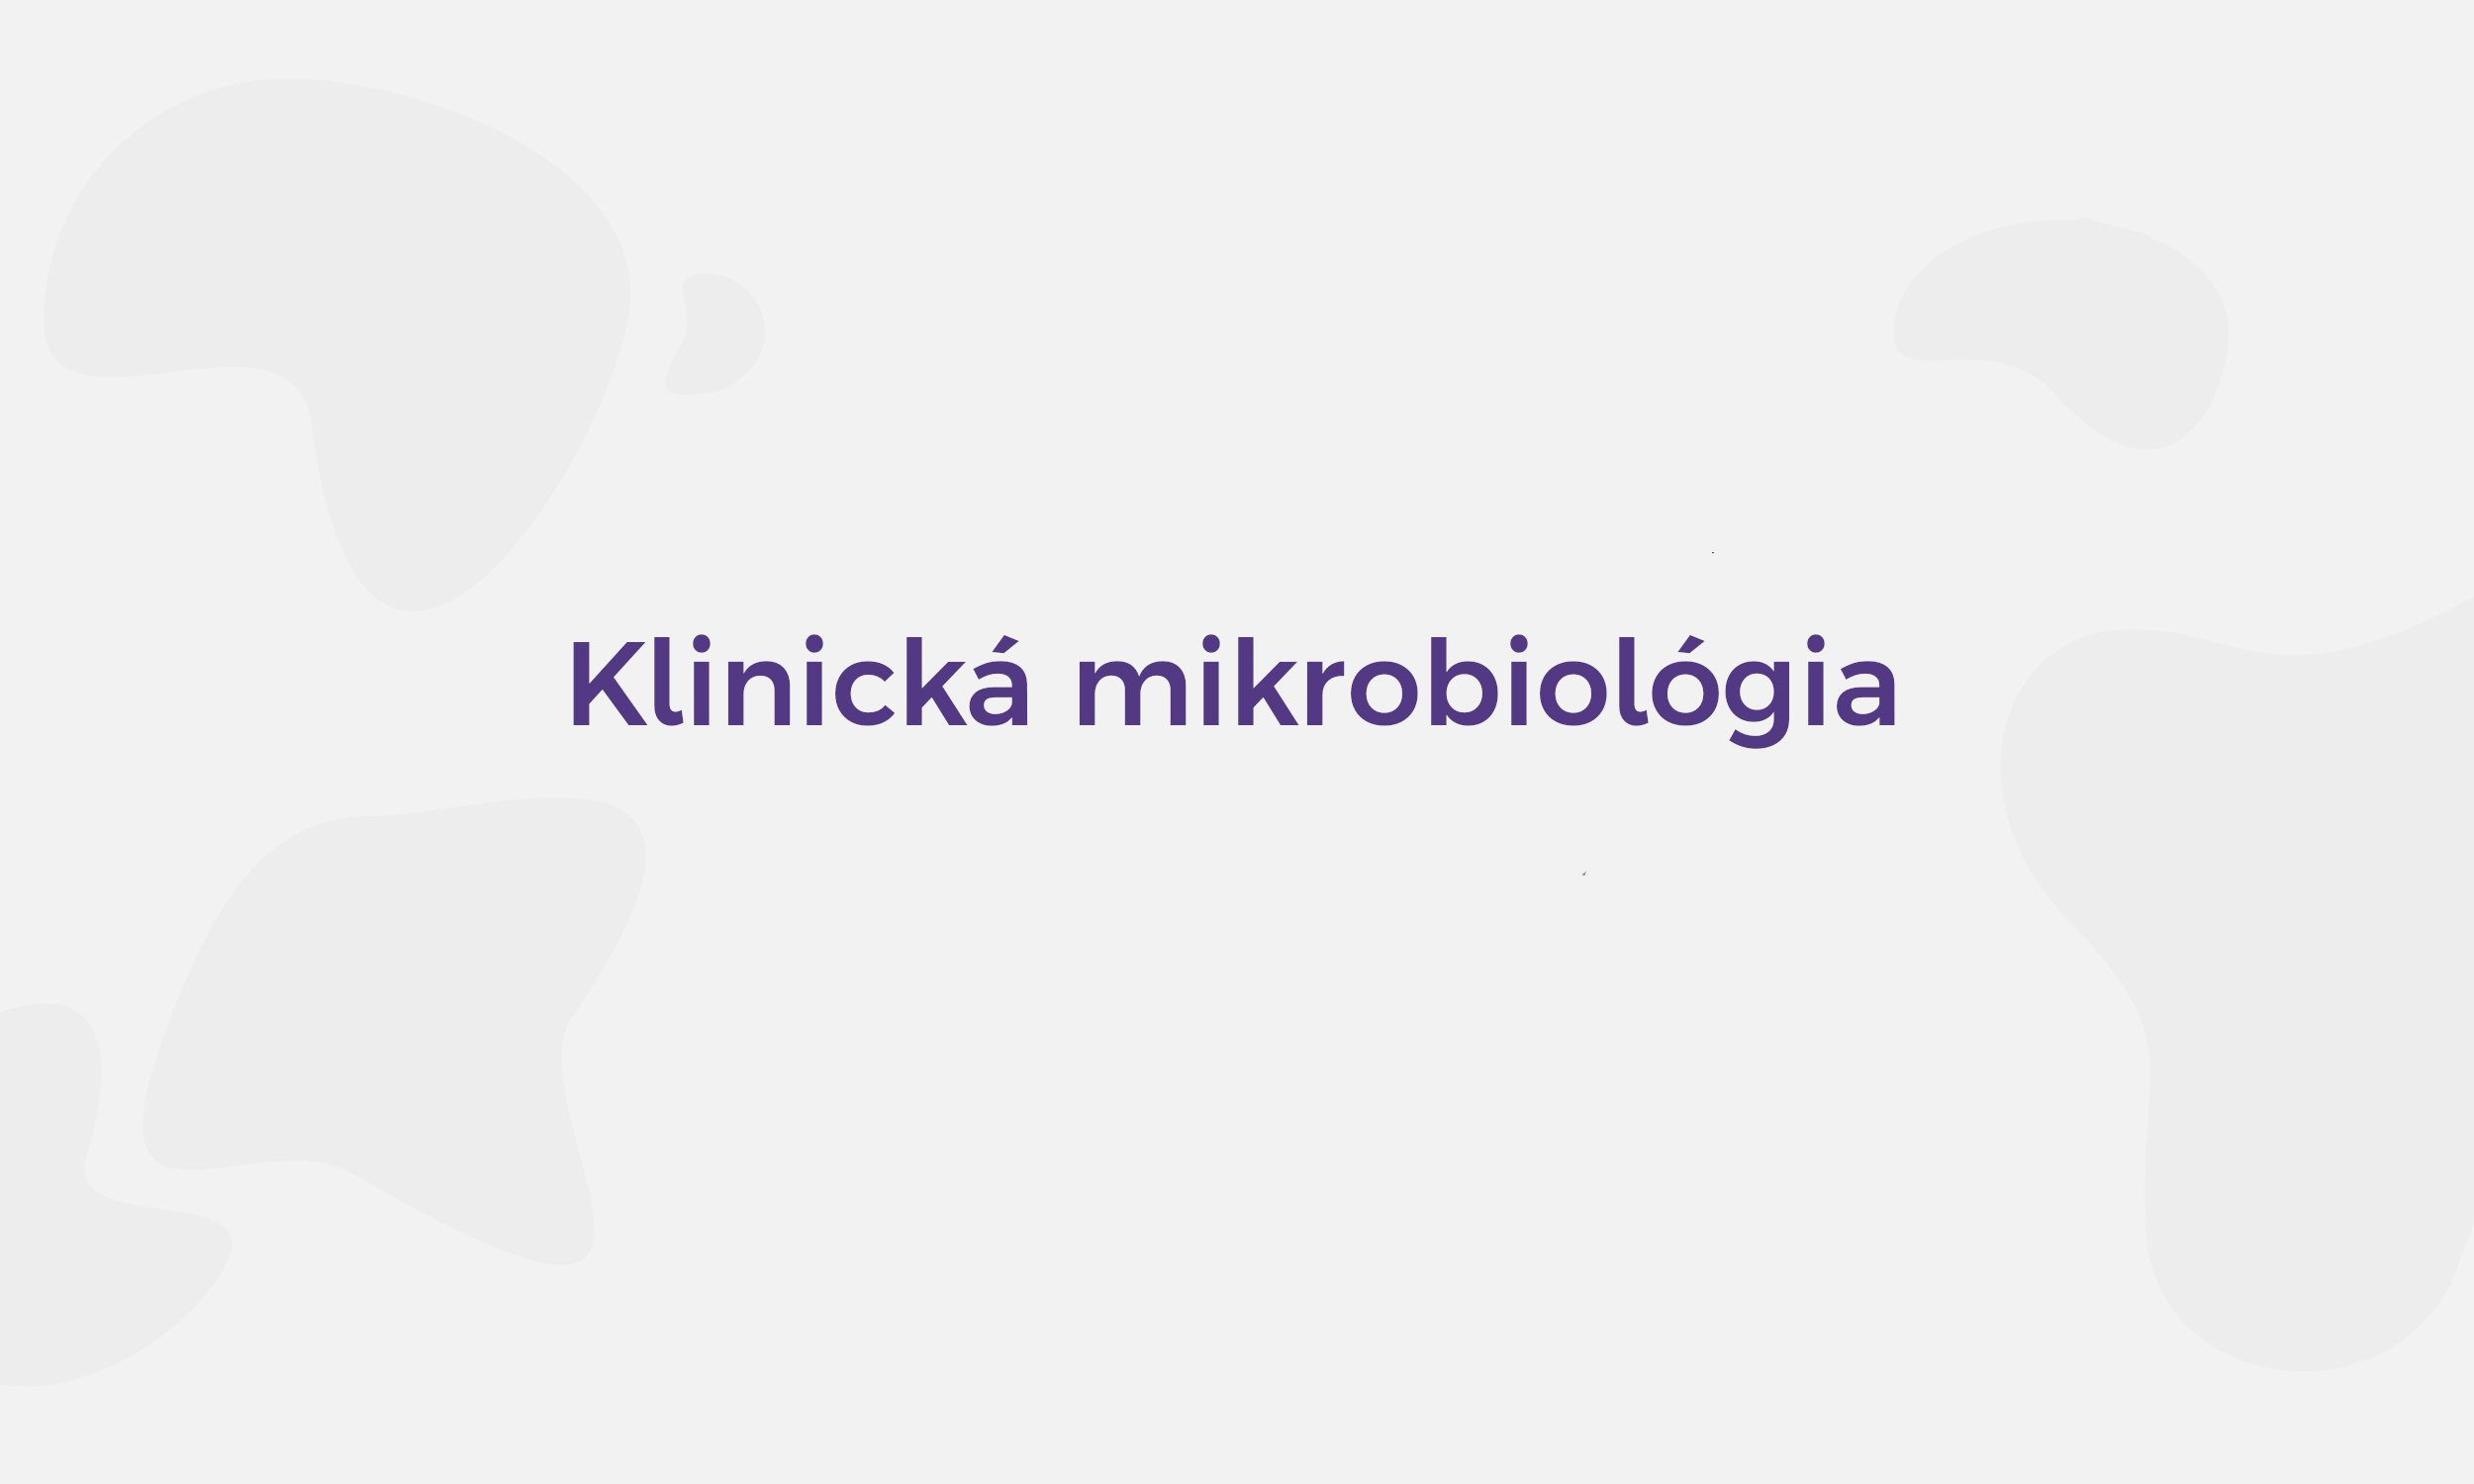 Klinická mikrobiológia